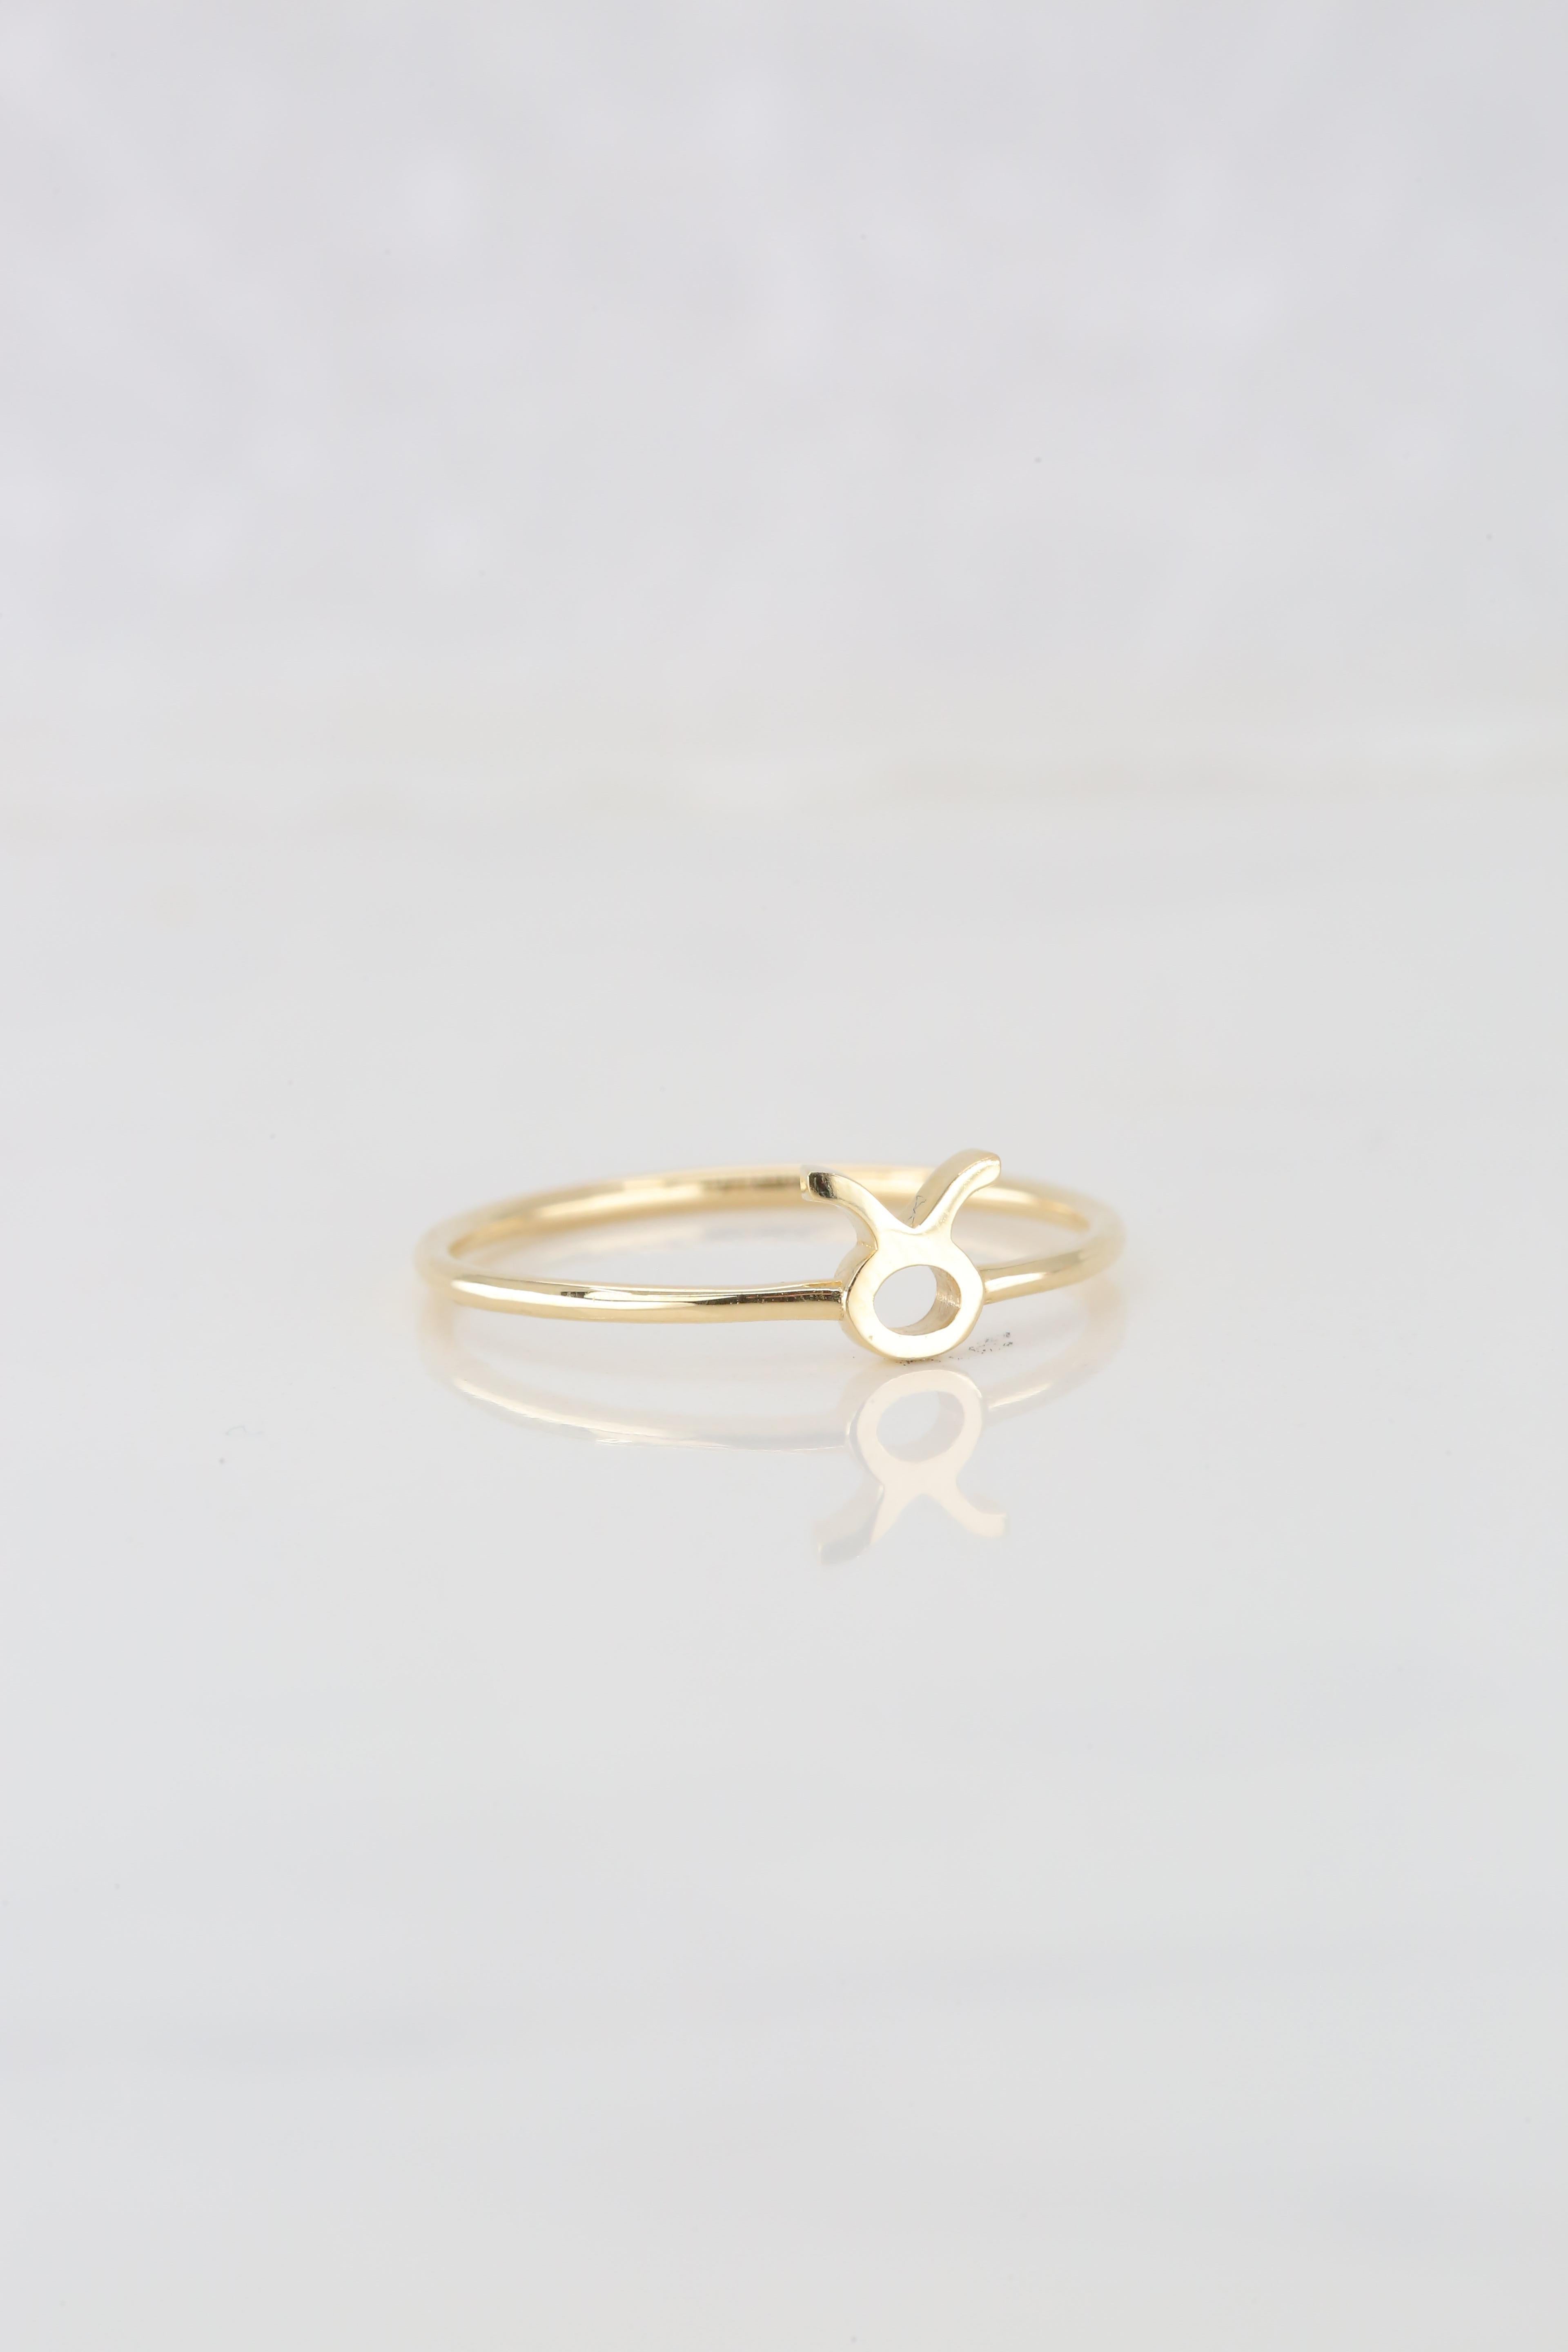 For Sale:  14K Gold Taurus Zodiac Ring, Taurus Sign Zodiac Ring 10